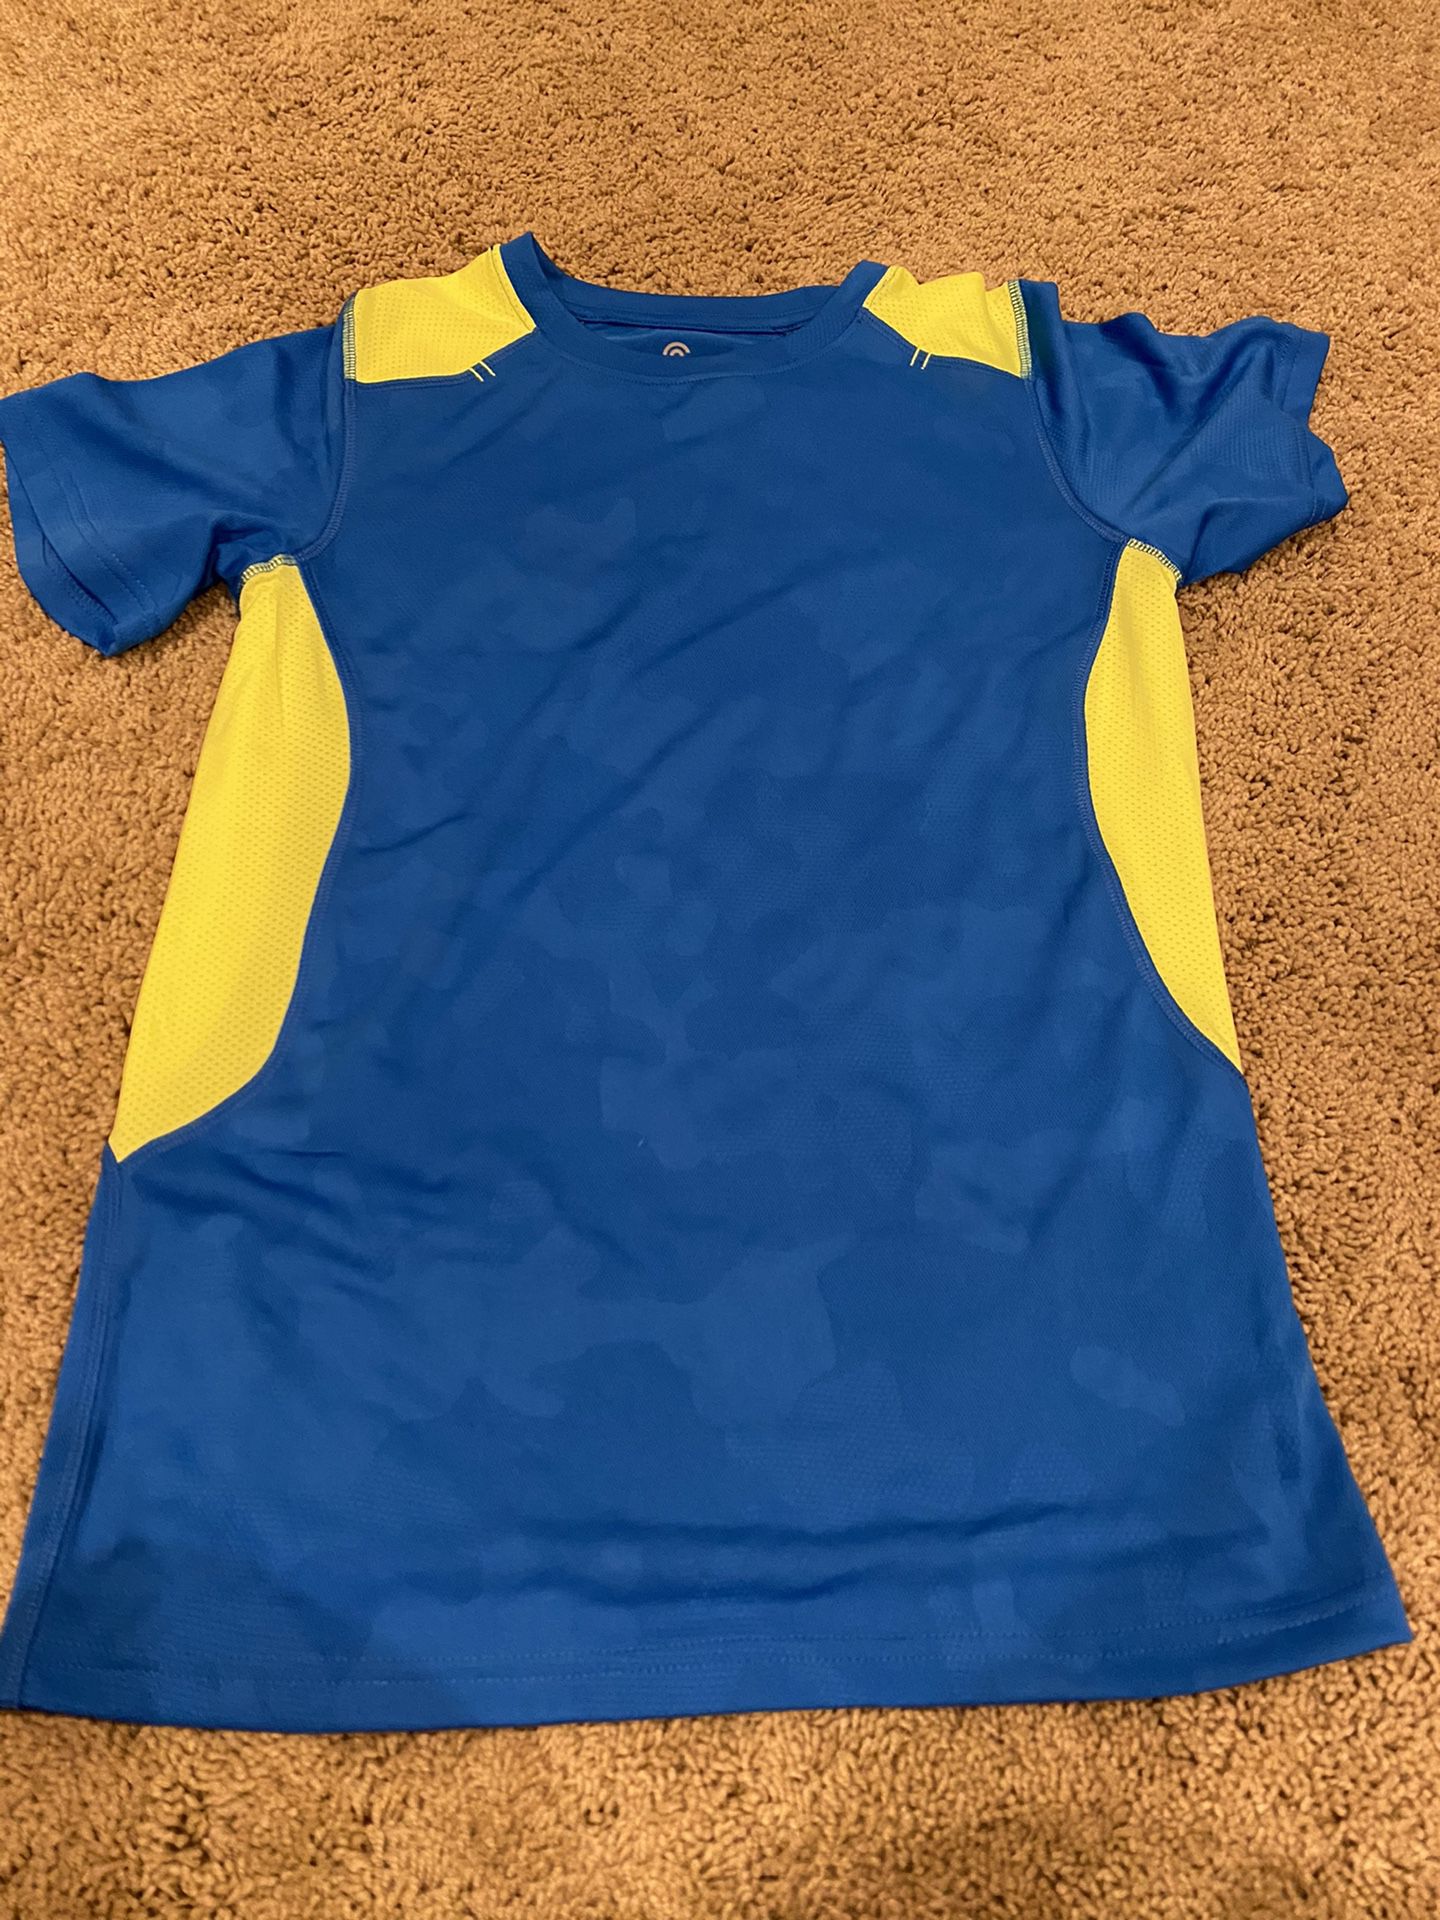 Boys camo blue/neon yellow shirt, size large